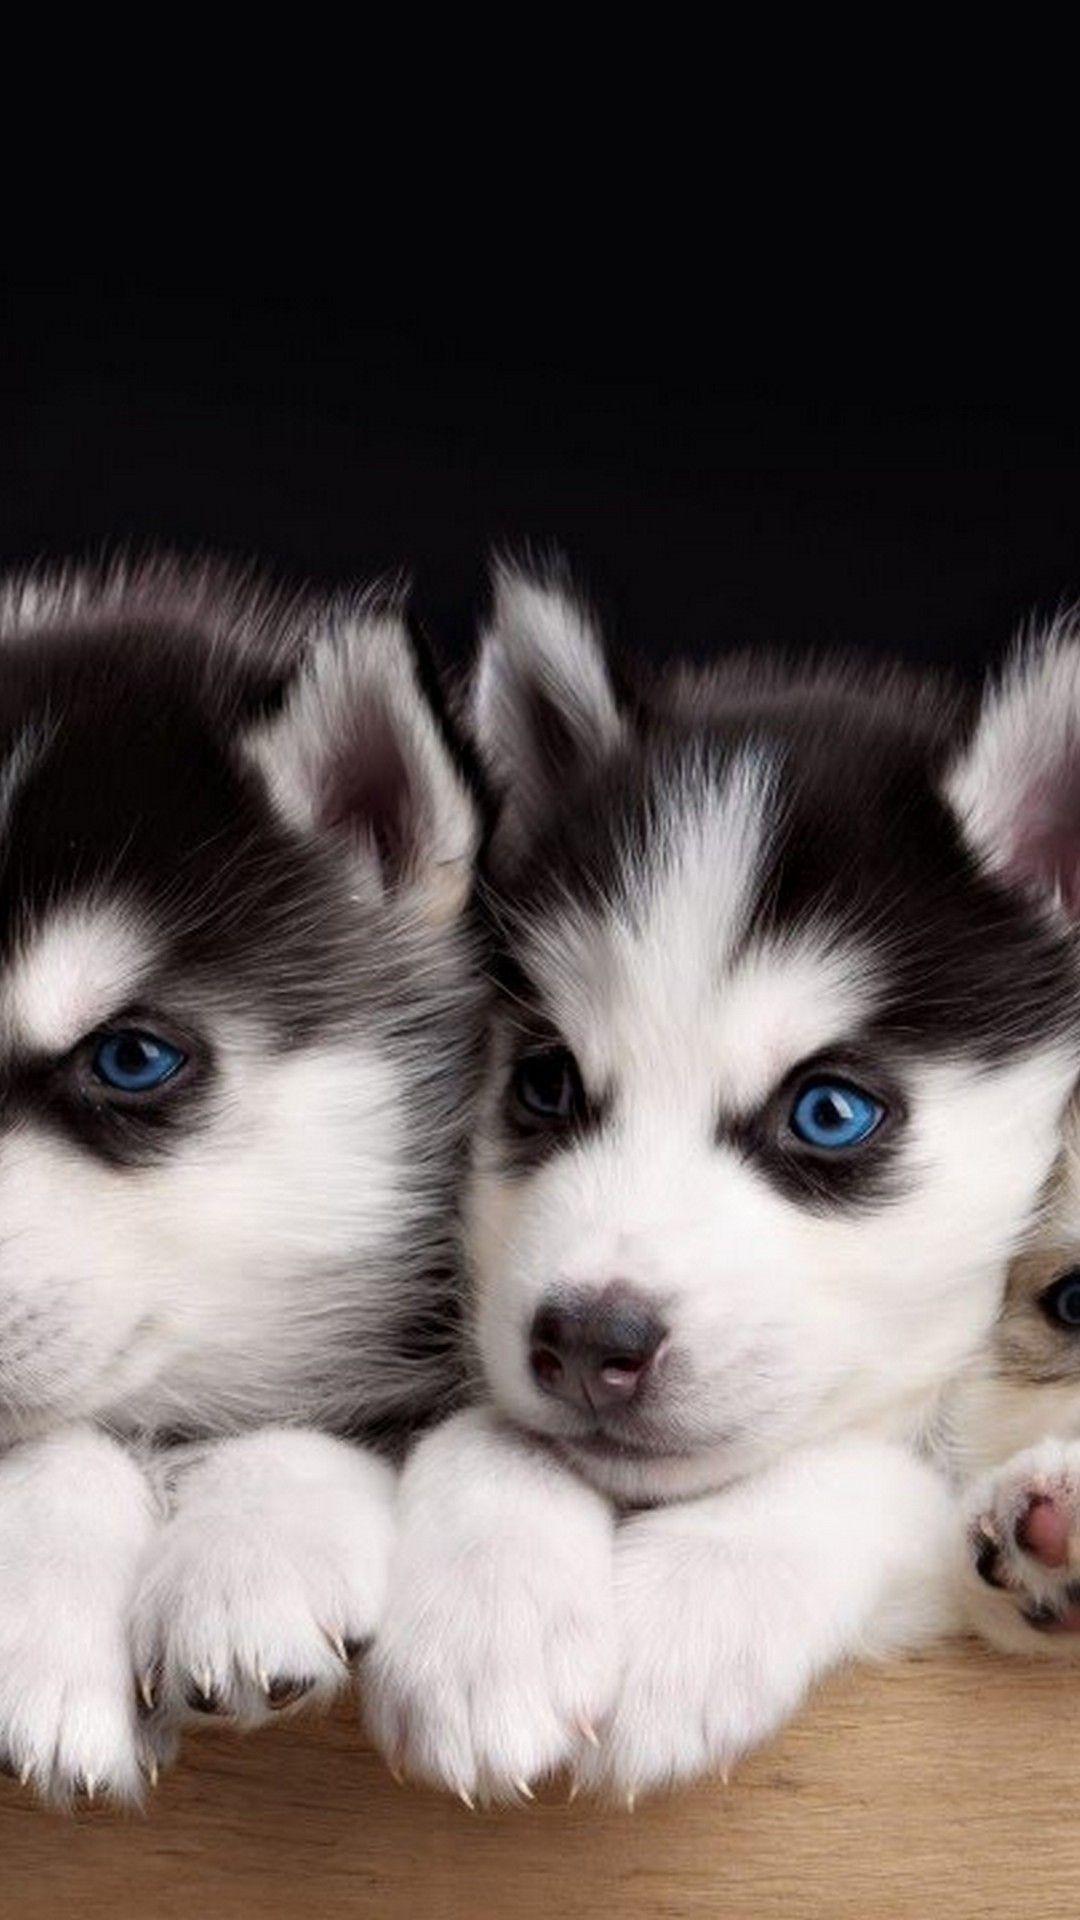 iPhone Wallpaper Cute Puppies. Cute puppies, Cute dogs